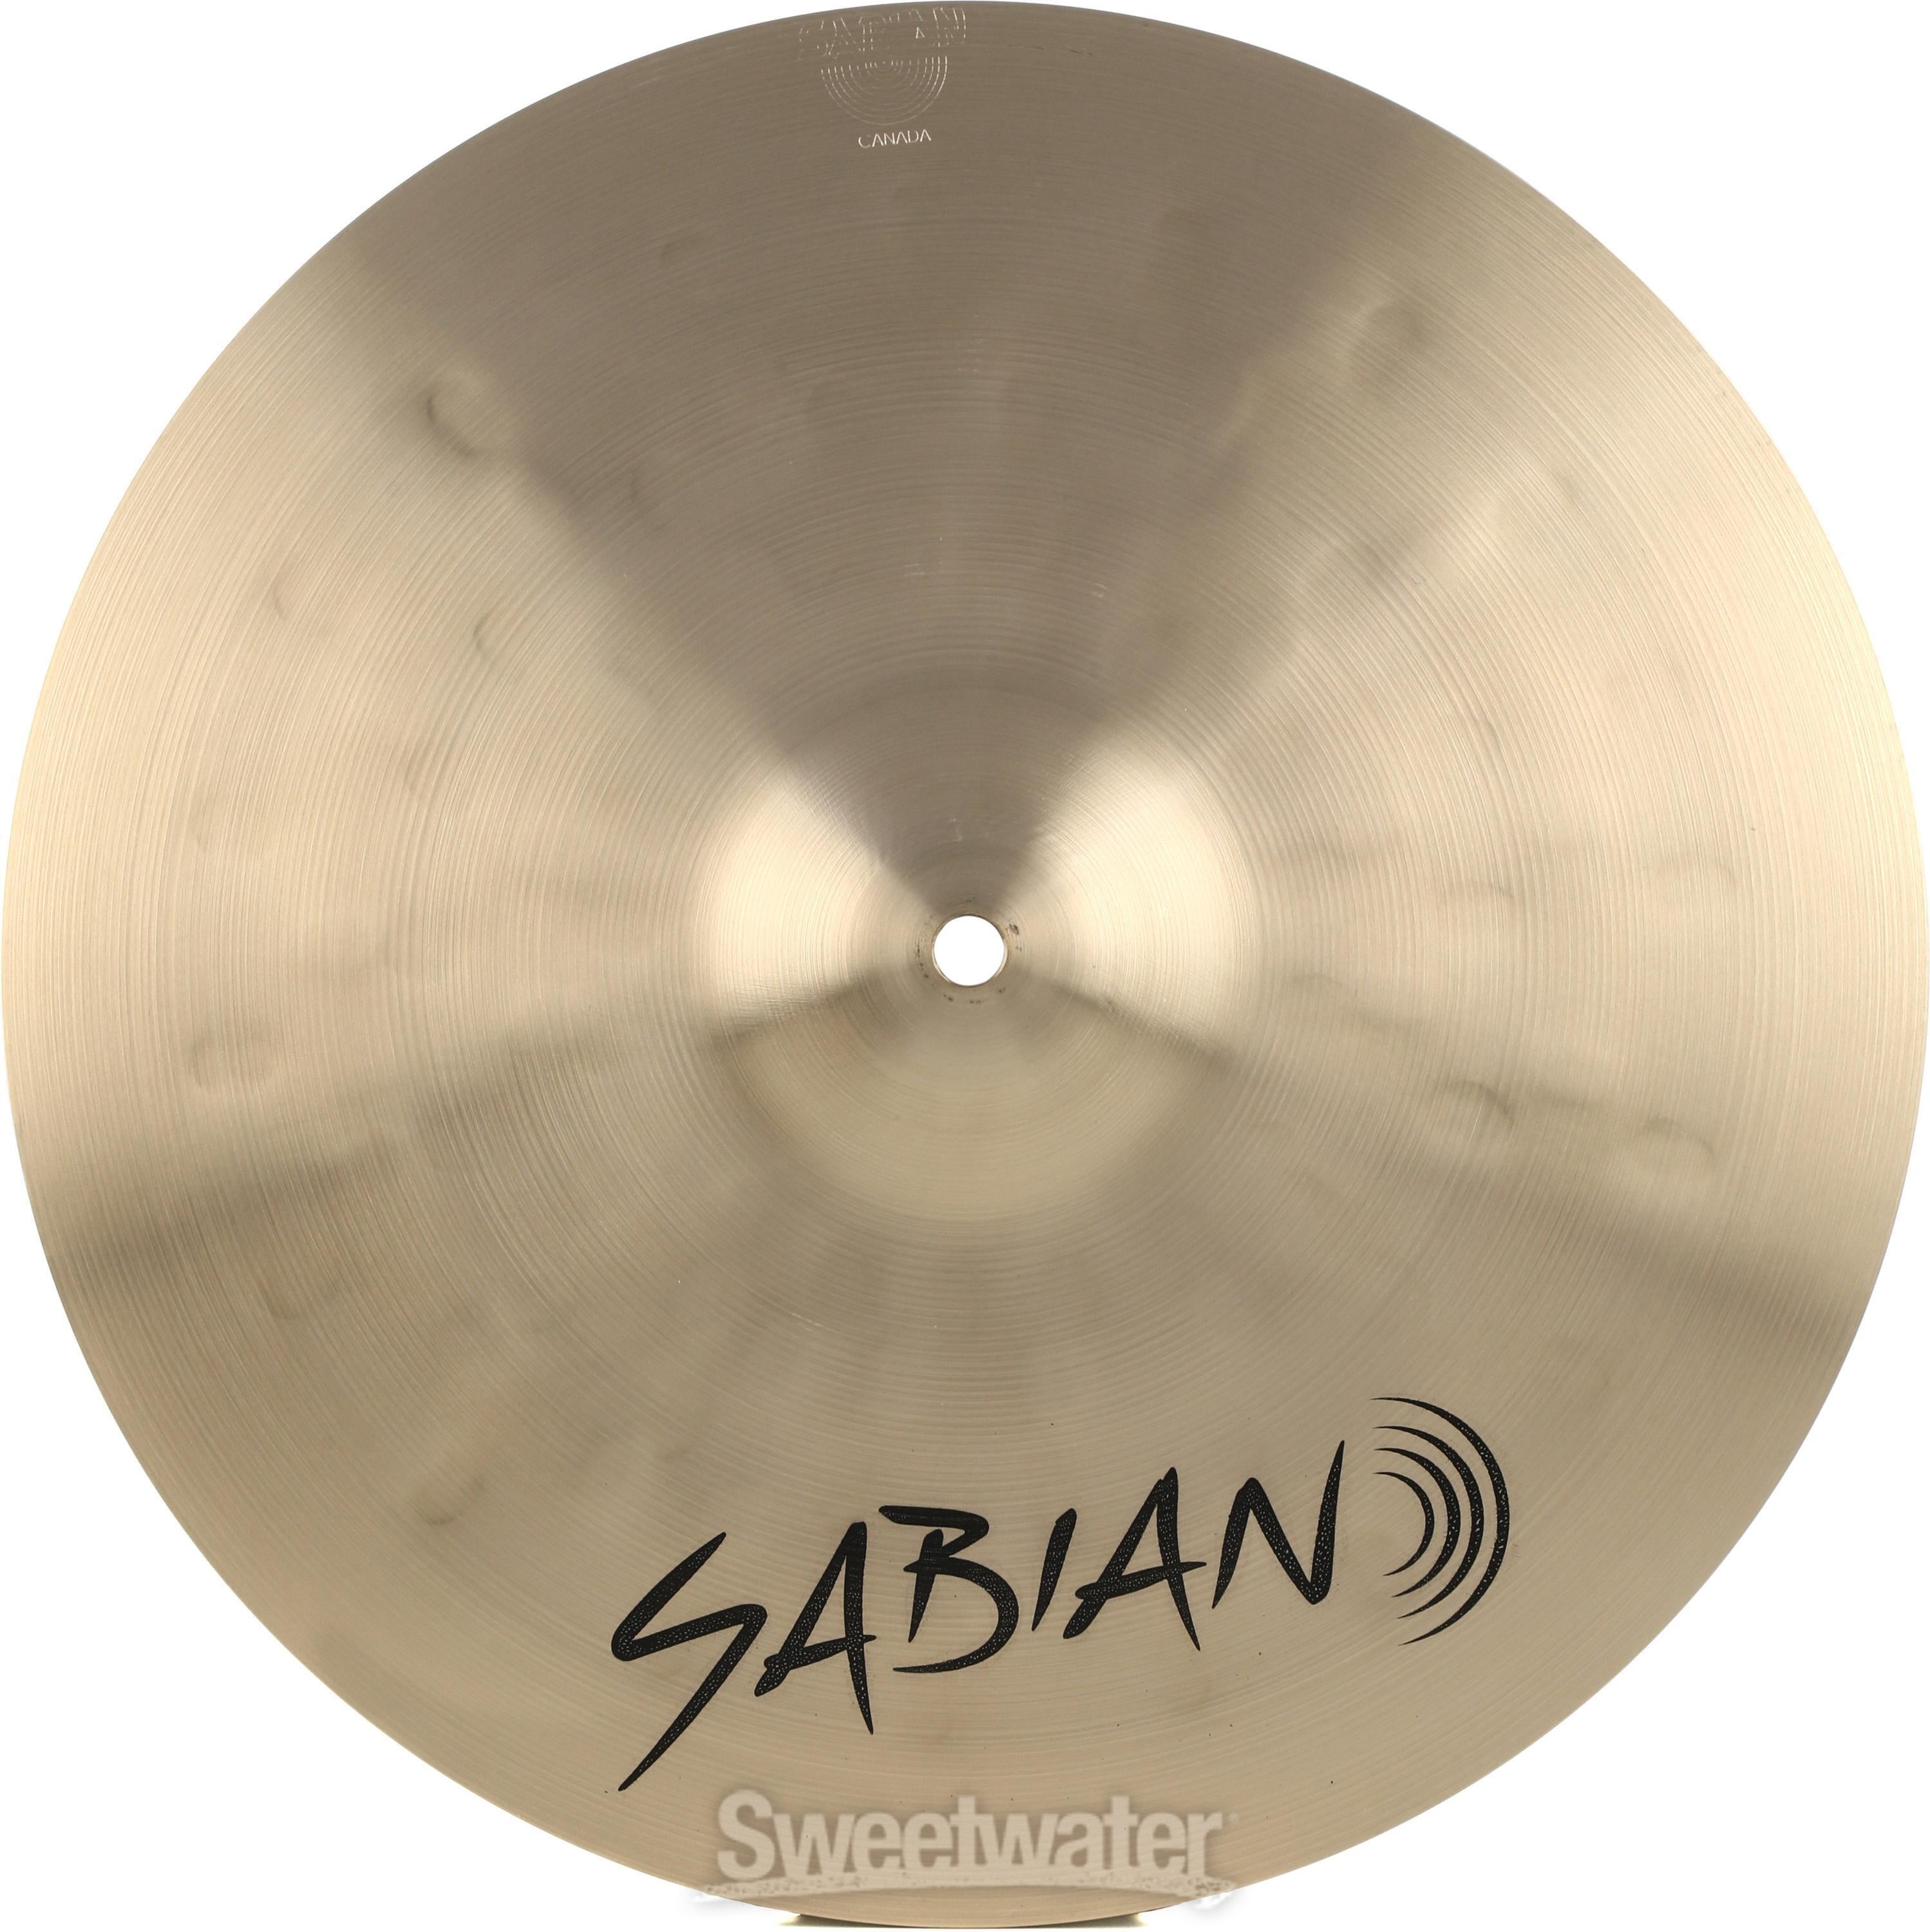 Sabian 14 inch HHX Legacy Hi-hat Cymbals